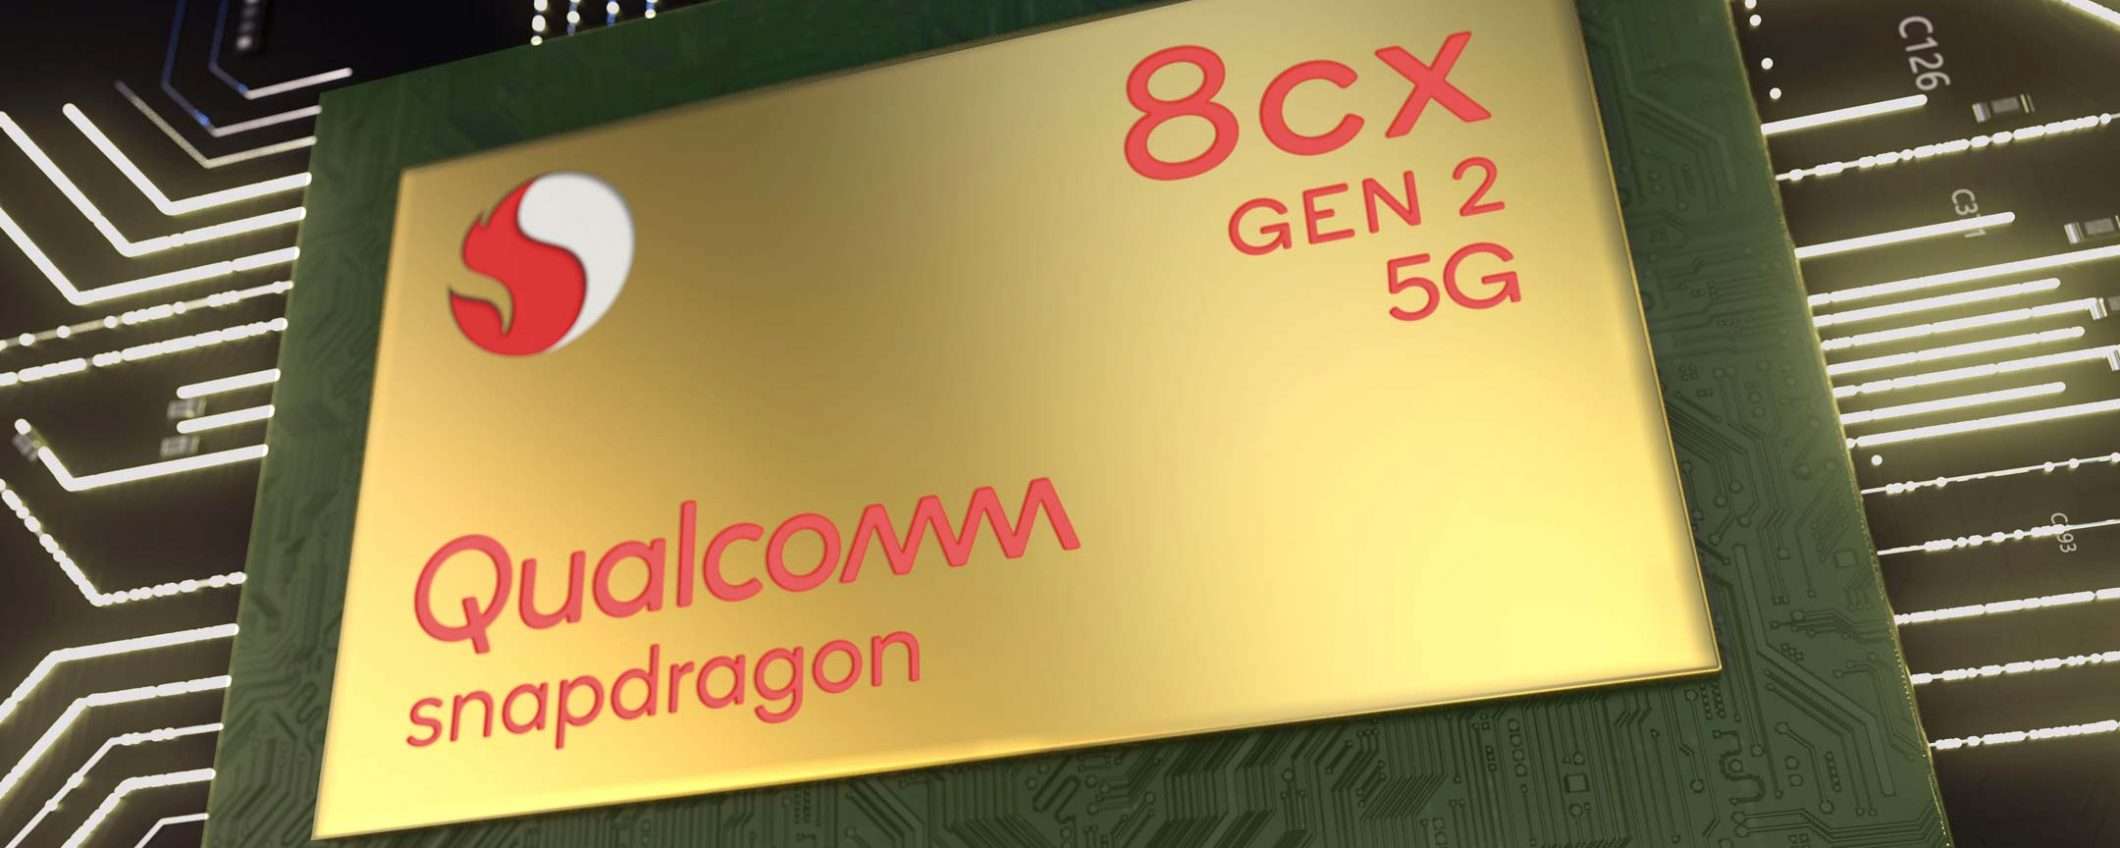 IFA 2020: ecco Qualcomm Snapdragon 8cx Gen 2 5G